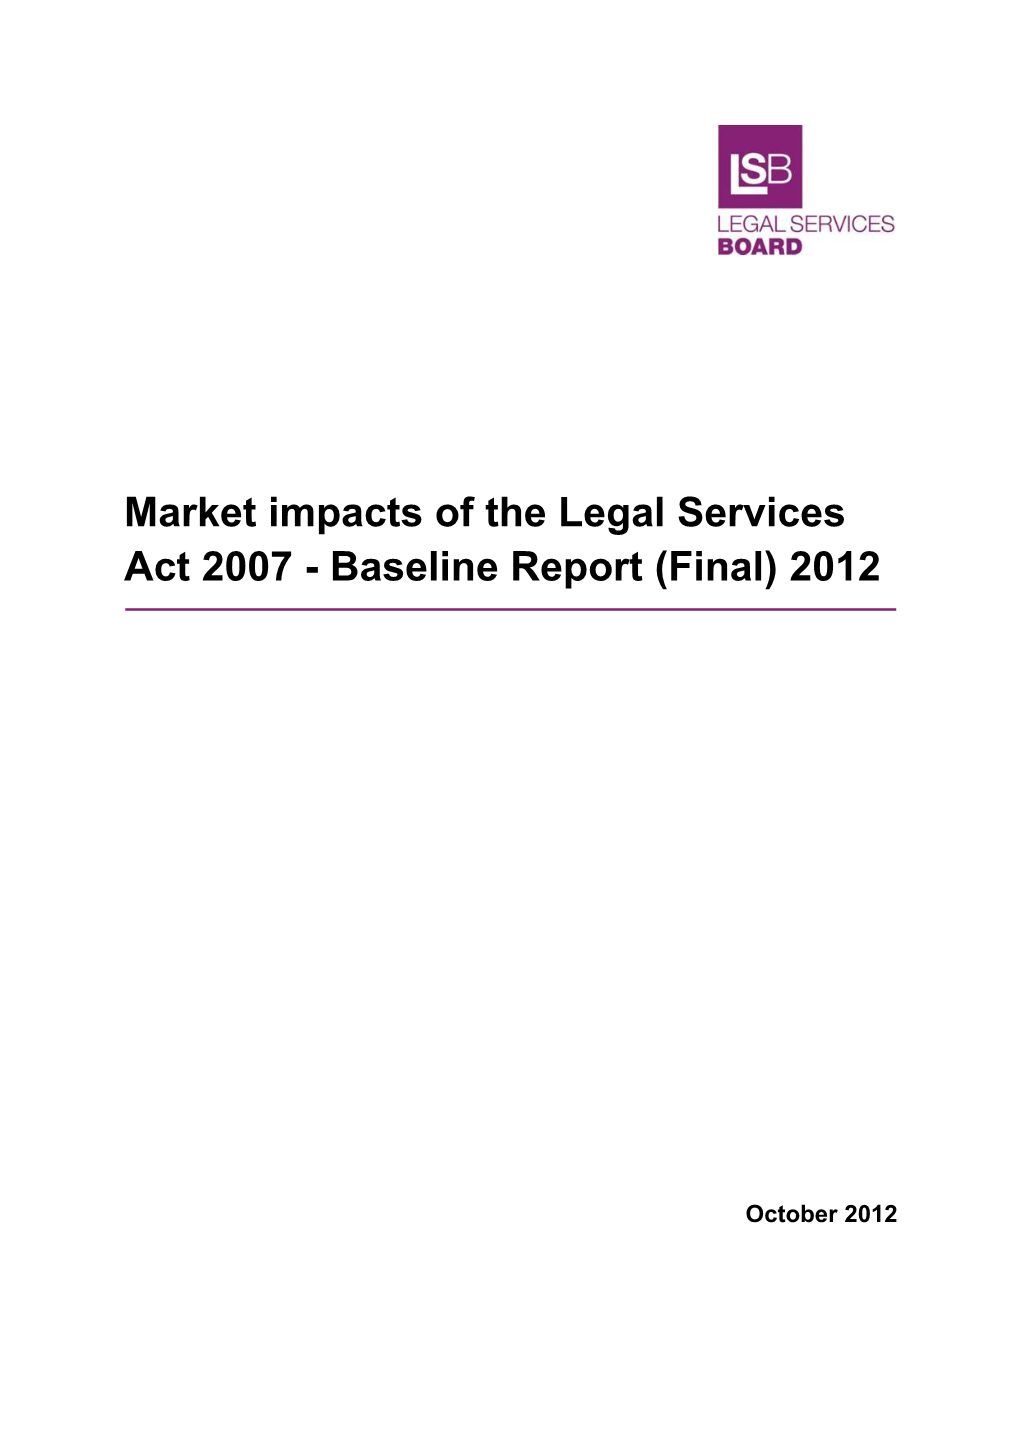 20121023 Evaluation Baseline Report Finalv1